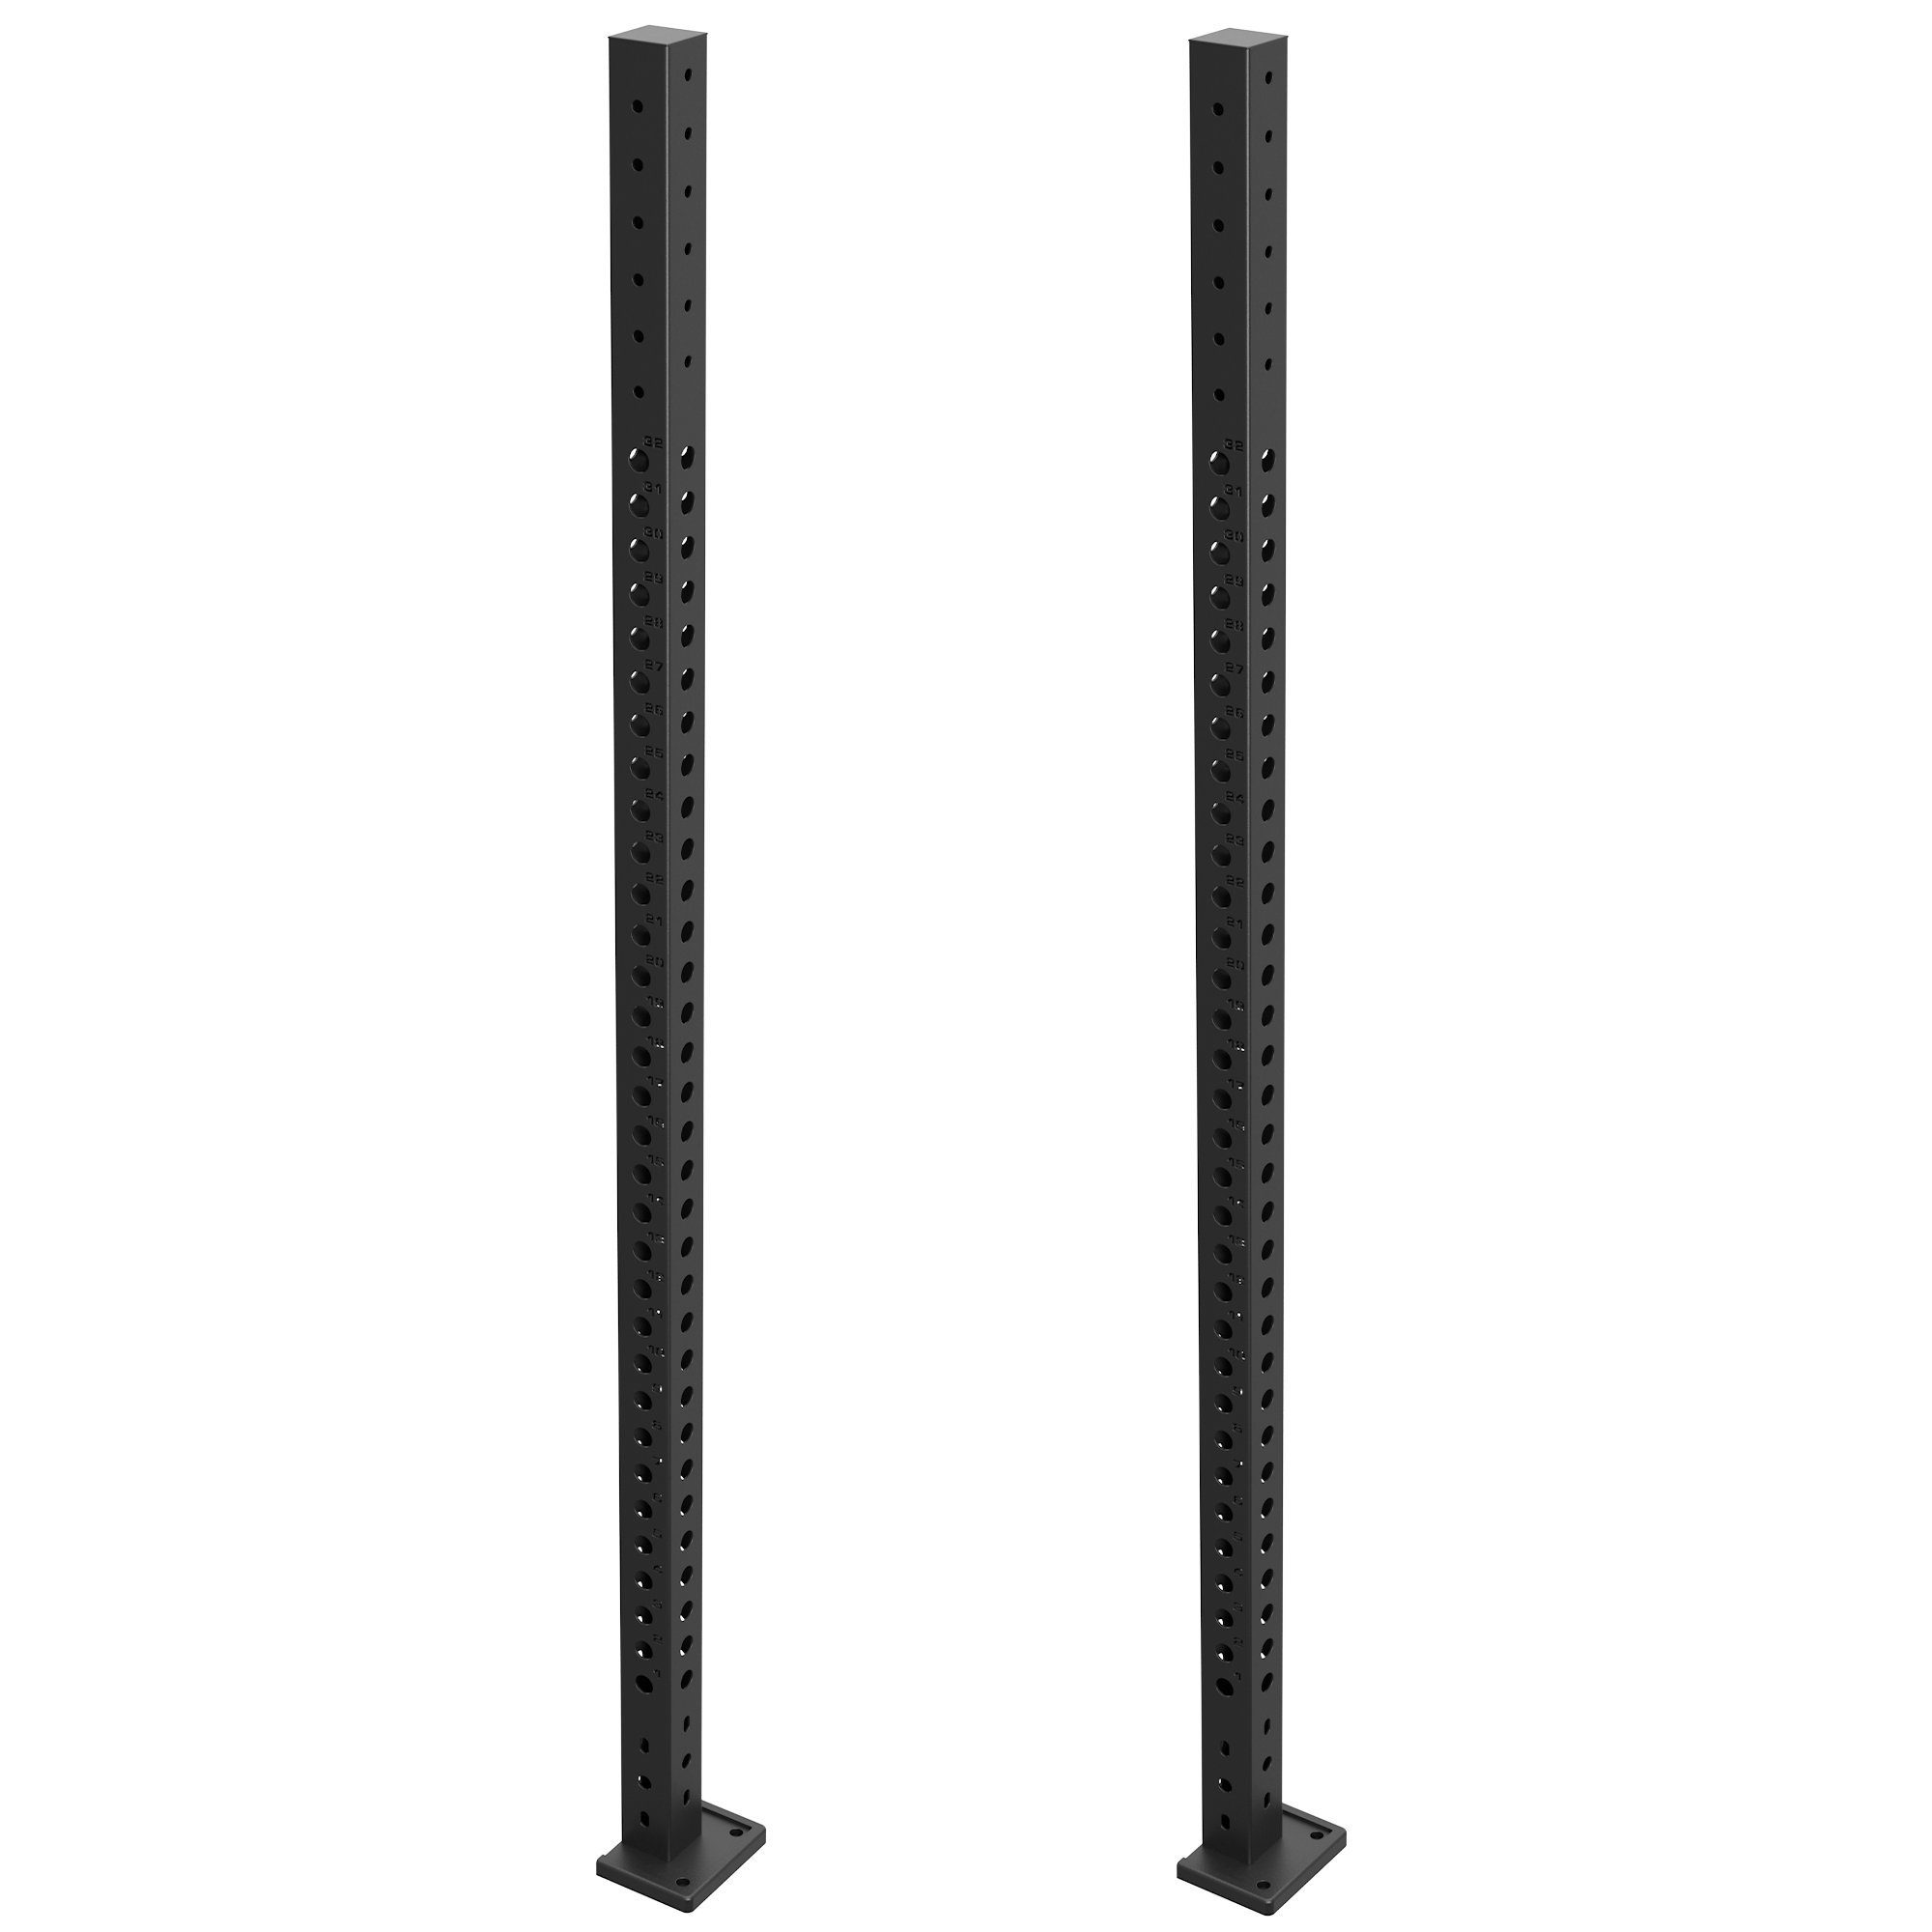 ATLETICA Power Rack R8 Upright Paarweise, 226 cm Höhe, 2 Farboptionen verfügbar Black